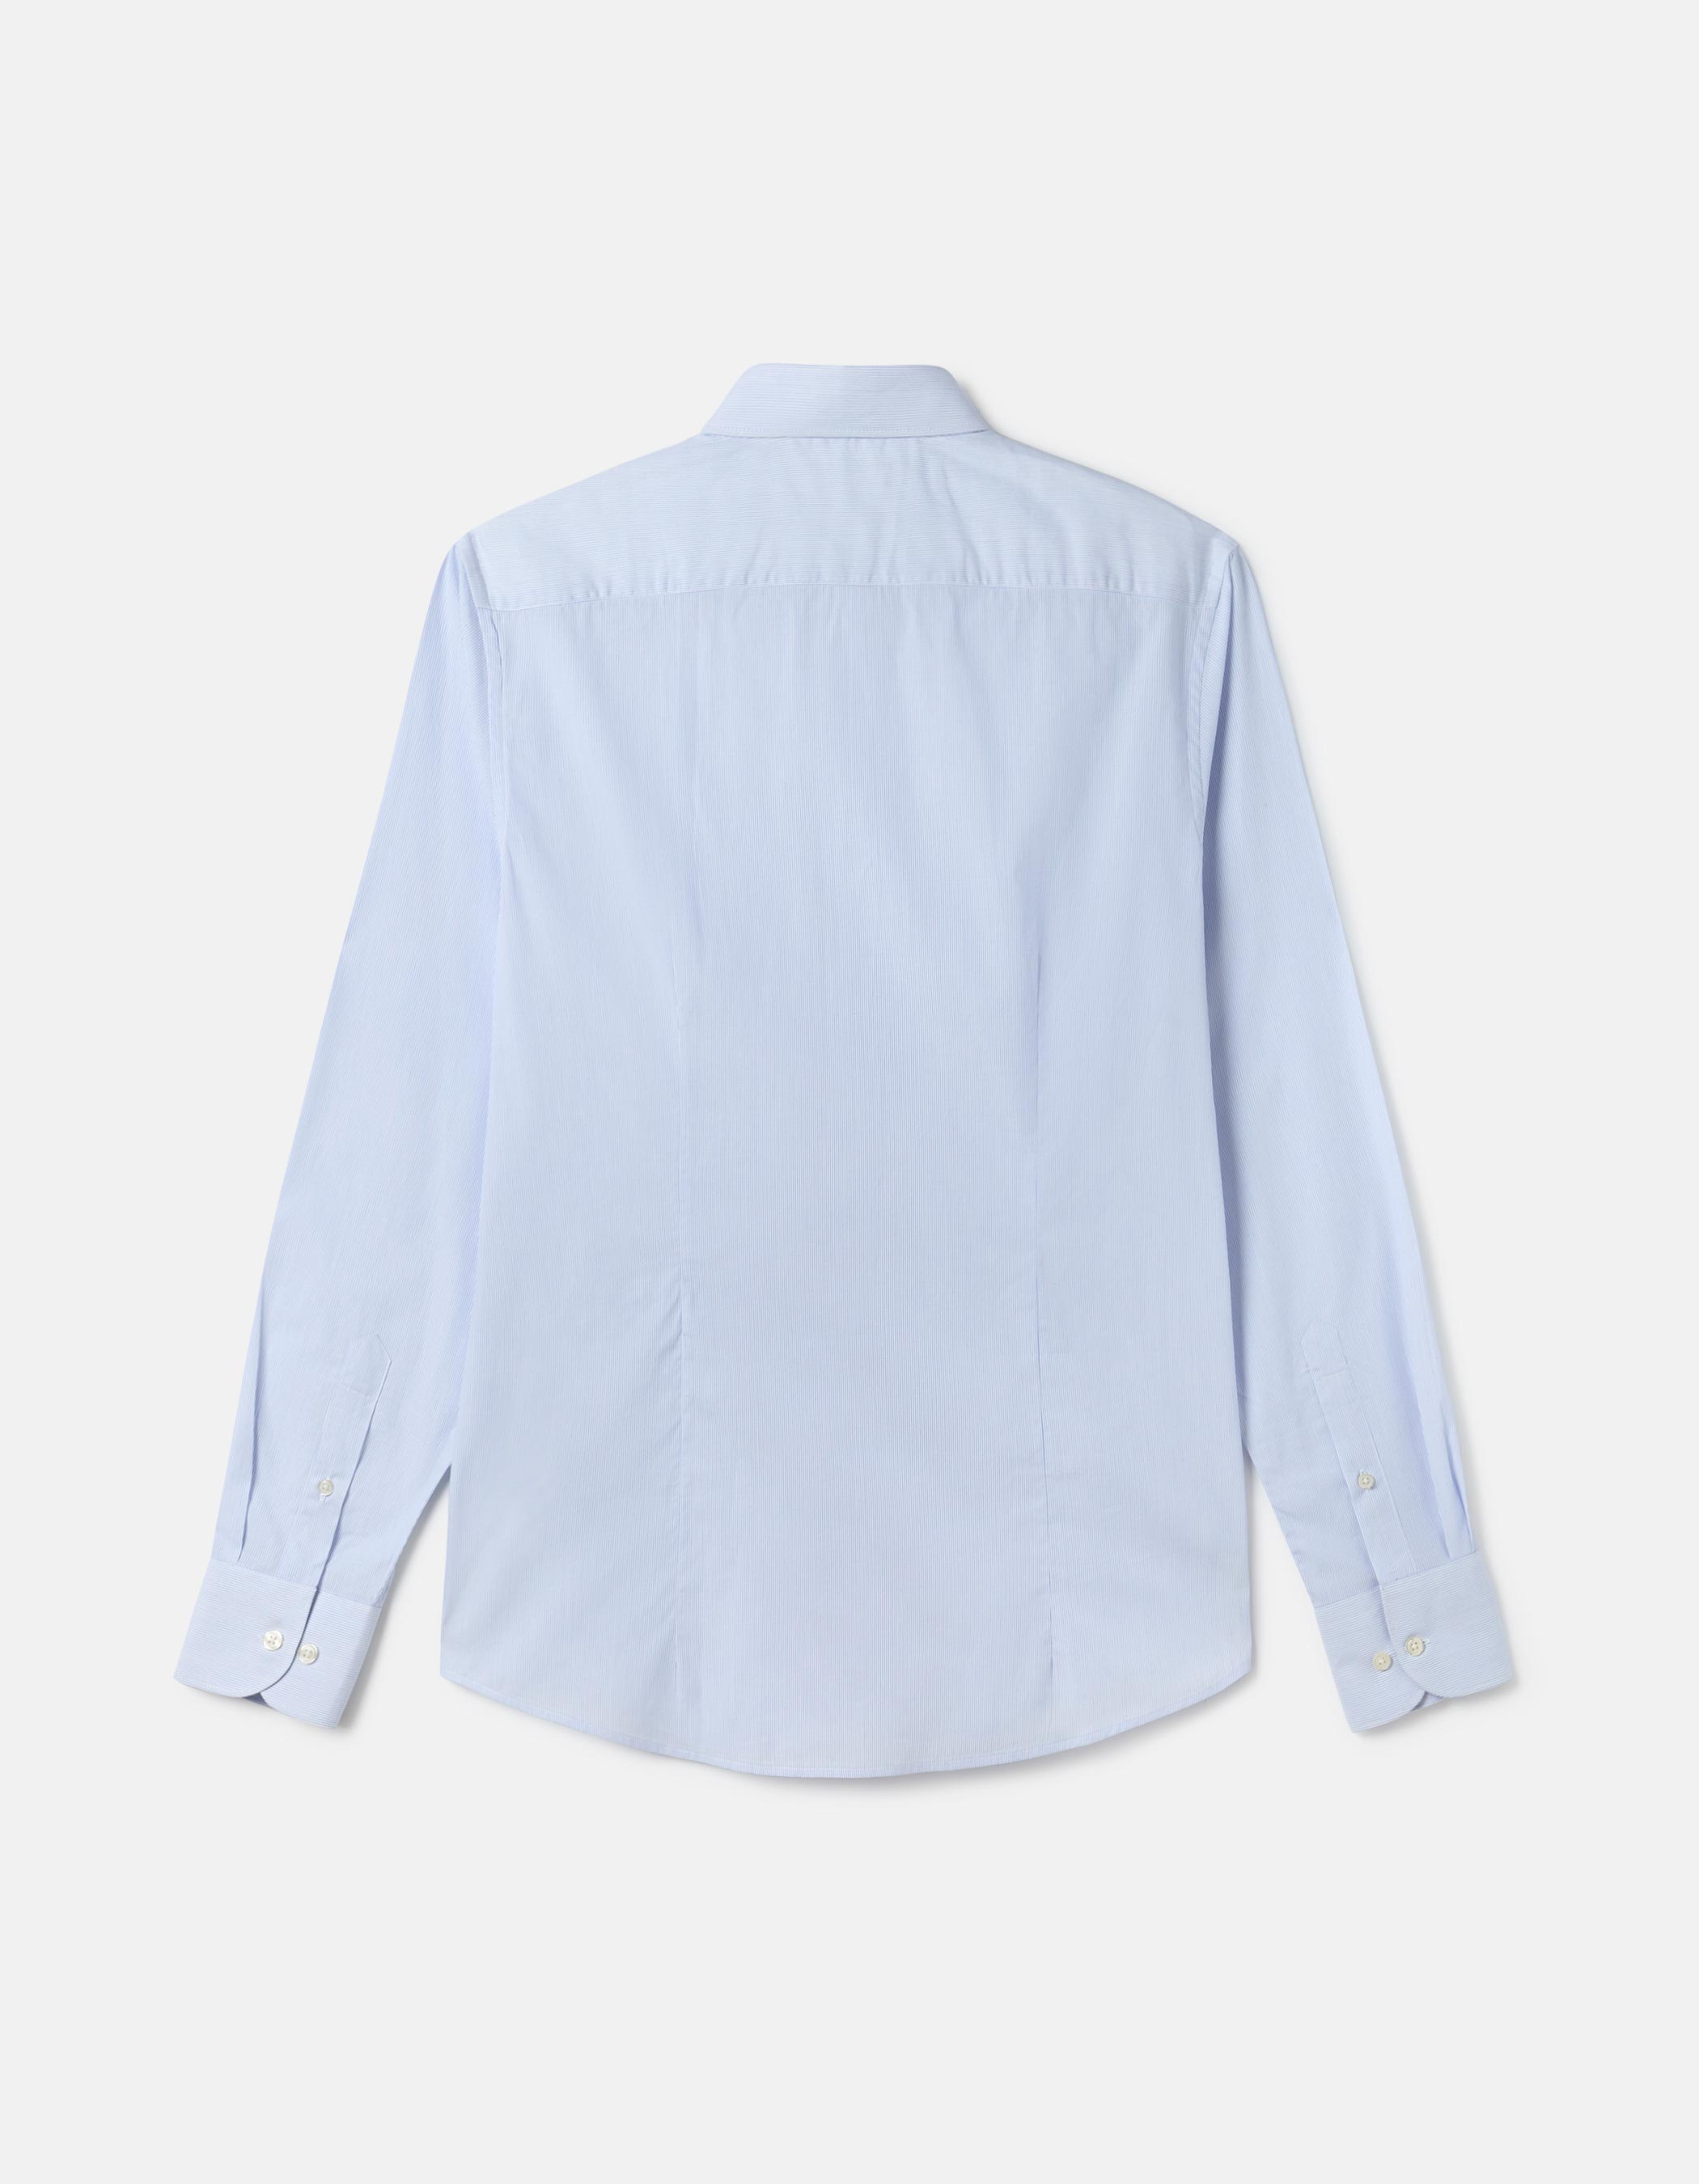 Camisa blanca con rayas azules 2